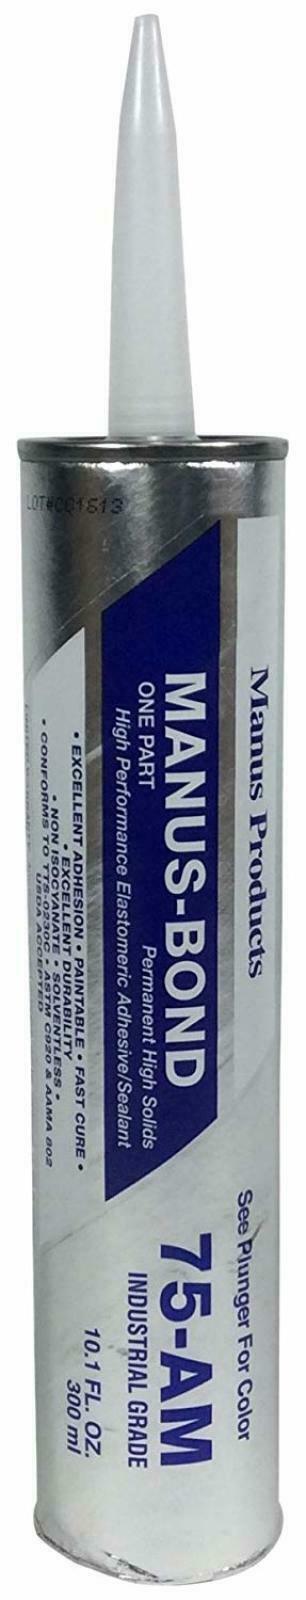 Manus Products 75AM Sealant 10.1 Oz Cartridge White Free Shipping New